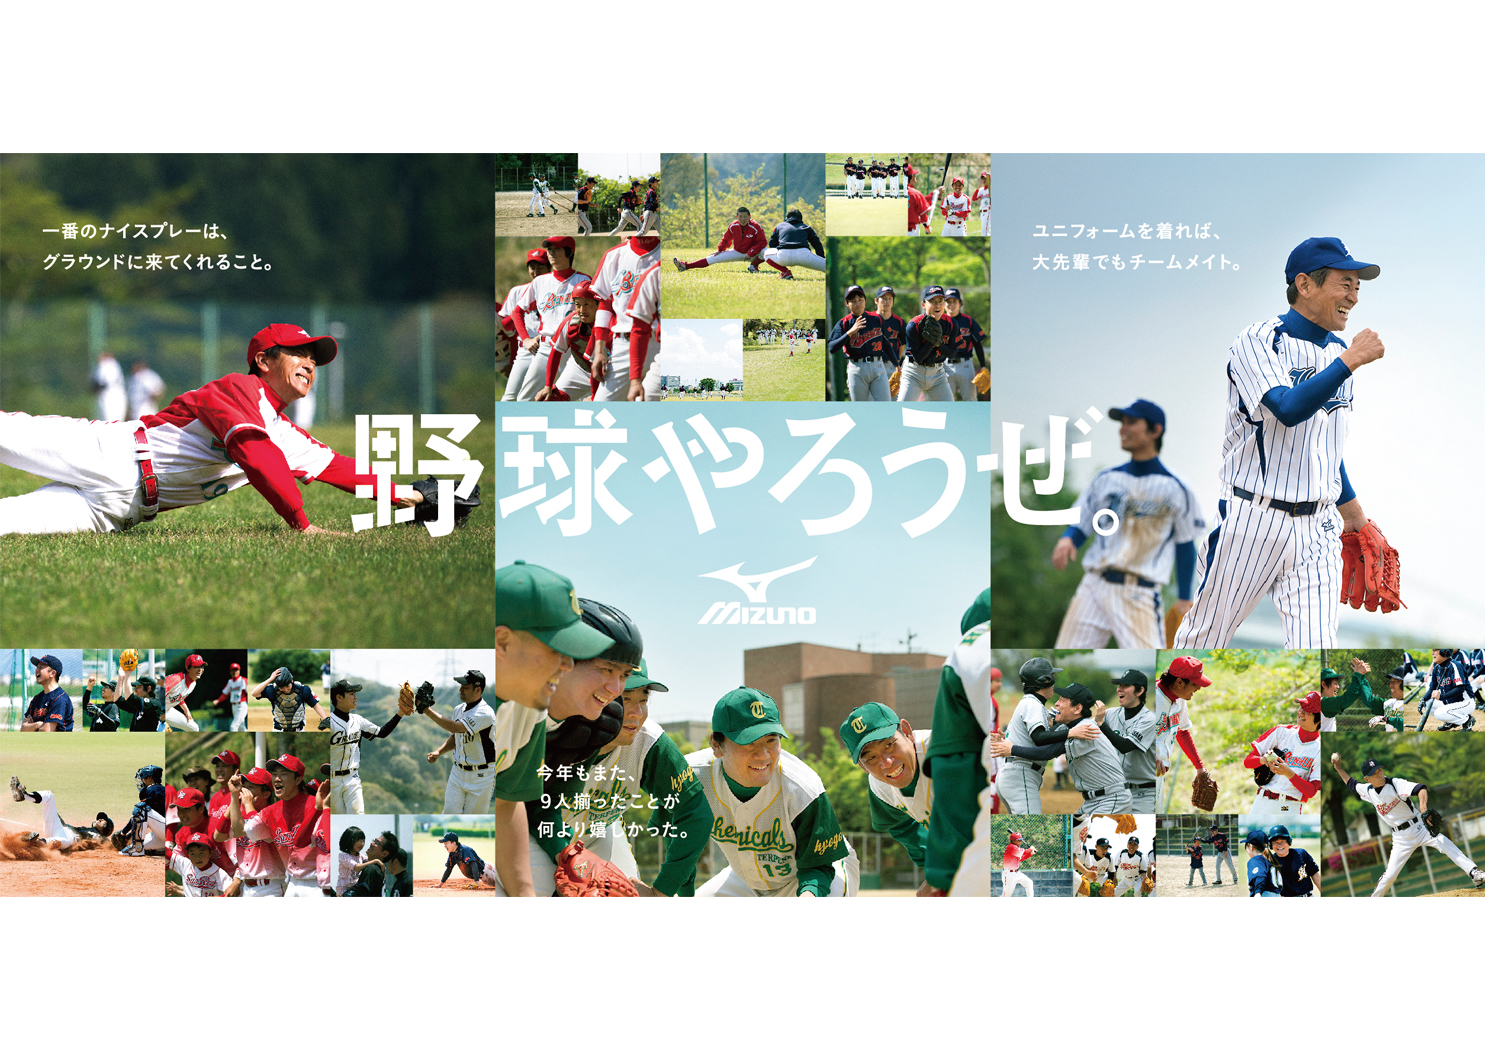 Mizuno Baseball tapestry 2014